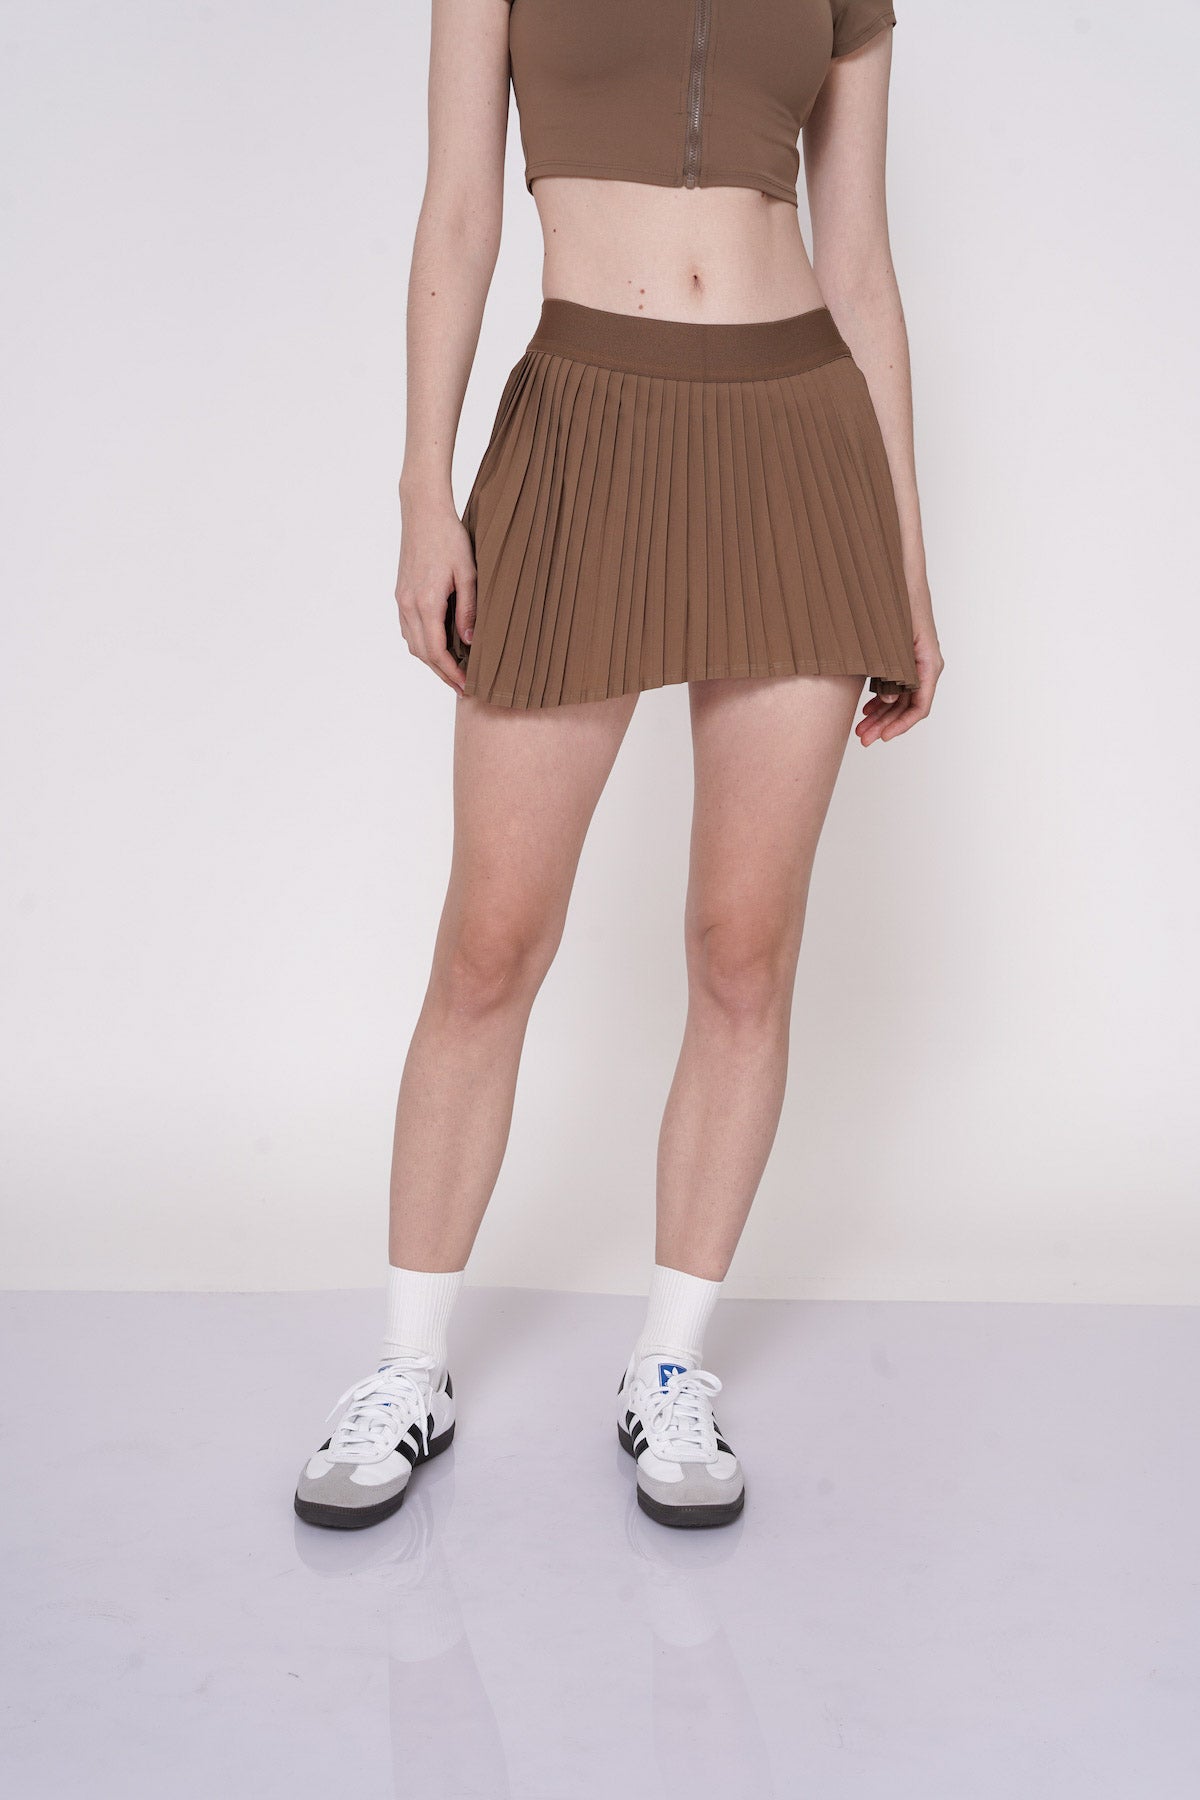 Jade Tennis Skirt in Khaki